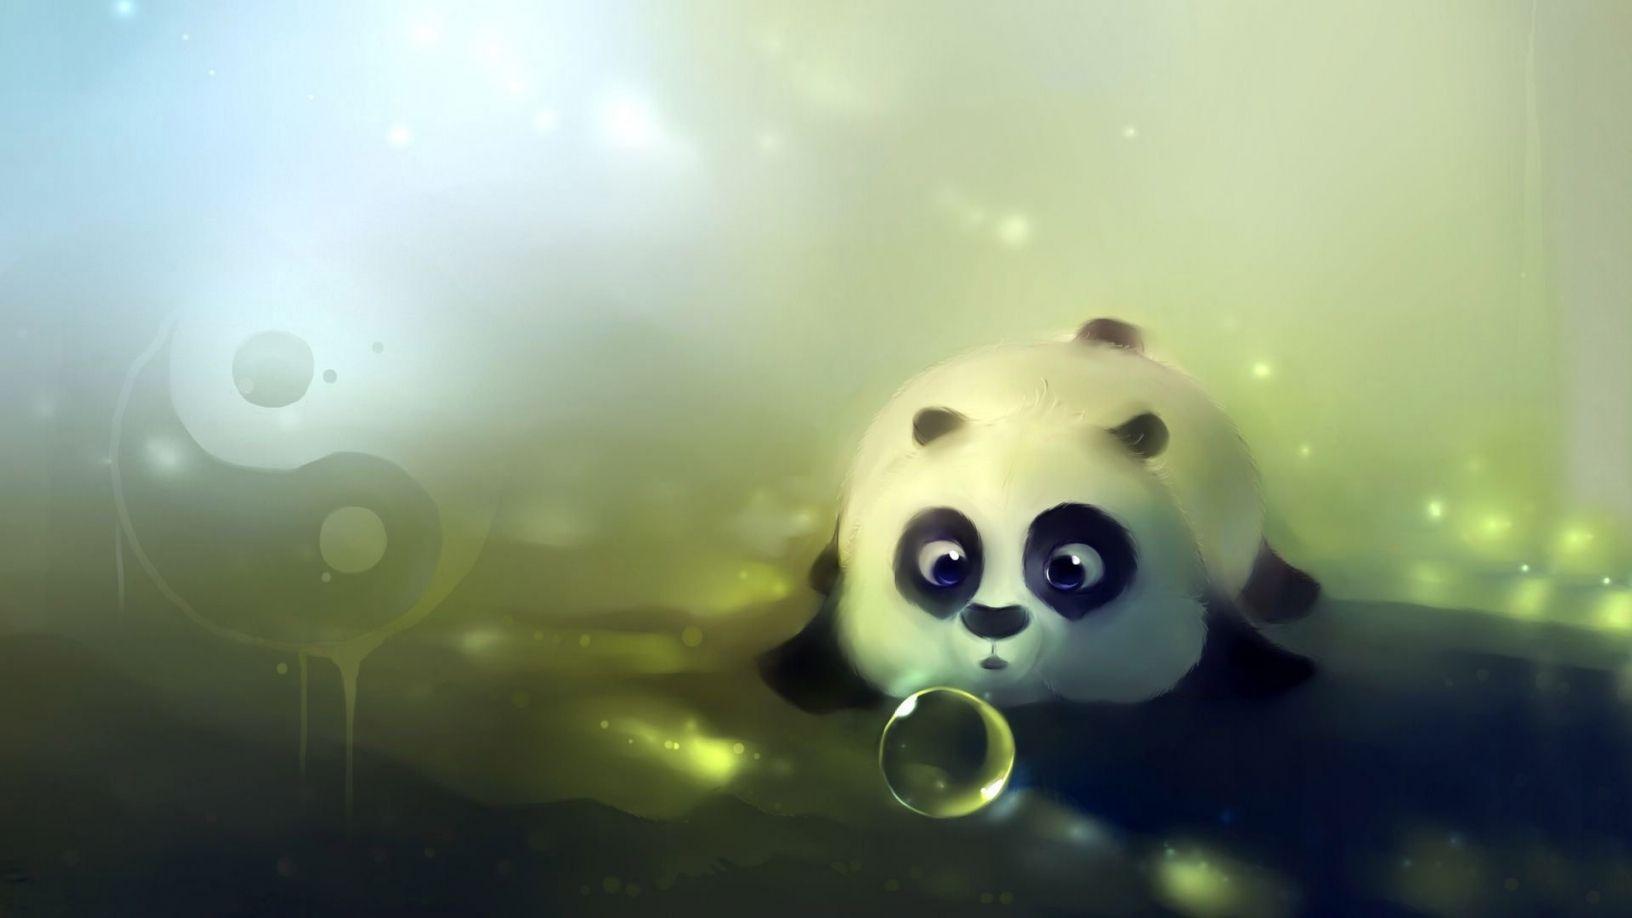 Cute Baby Panda Wallpaper Tumblr 3D Wallpaper. Abstract